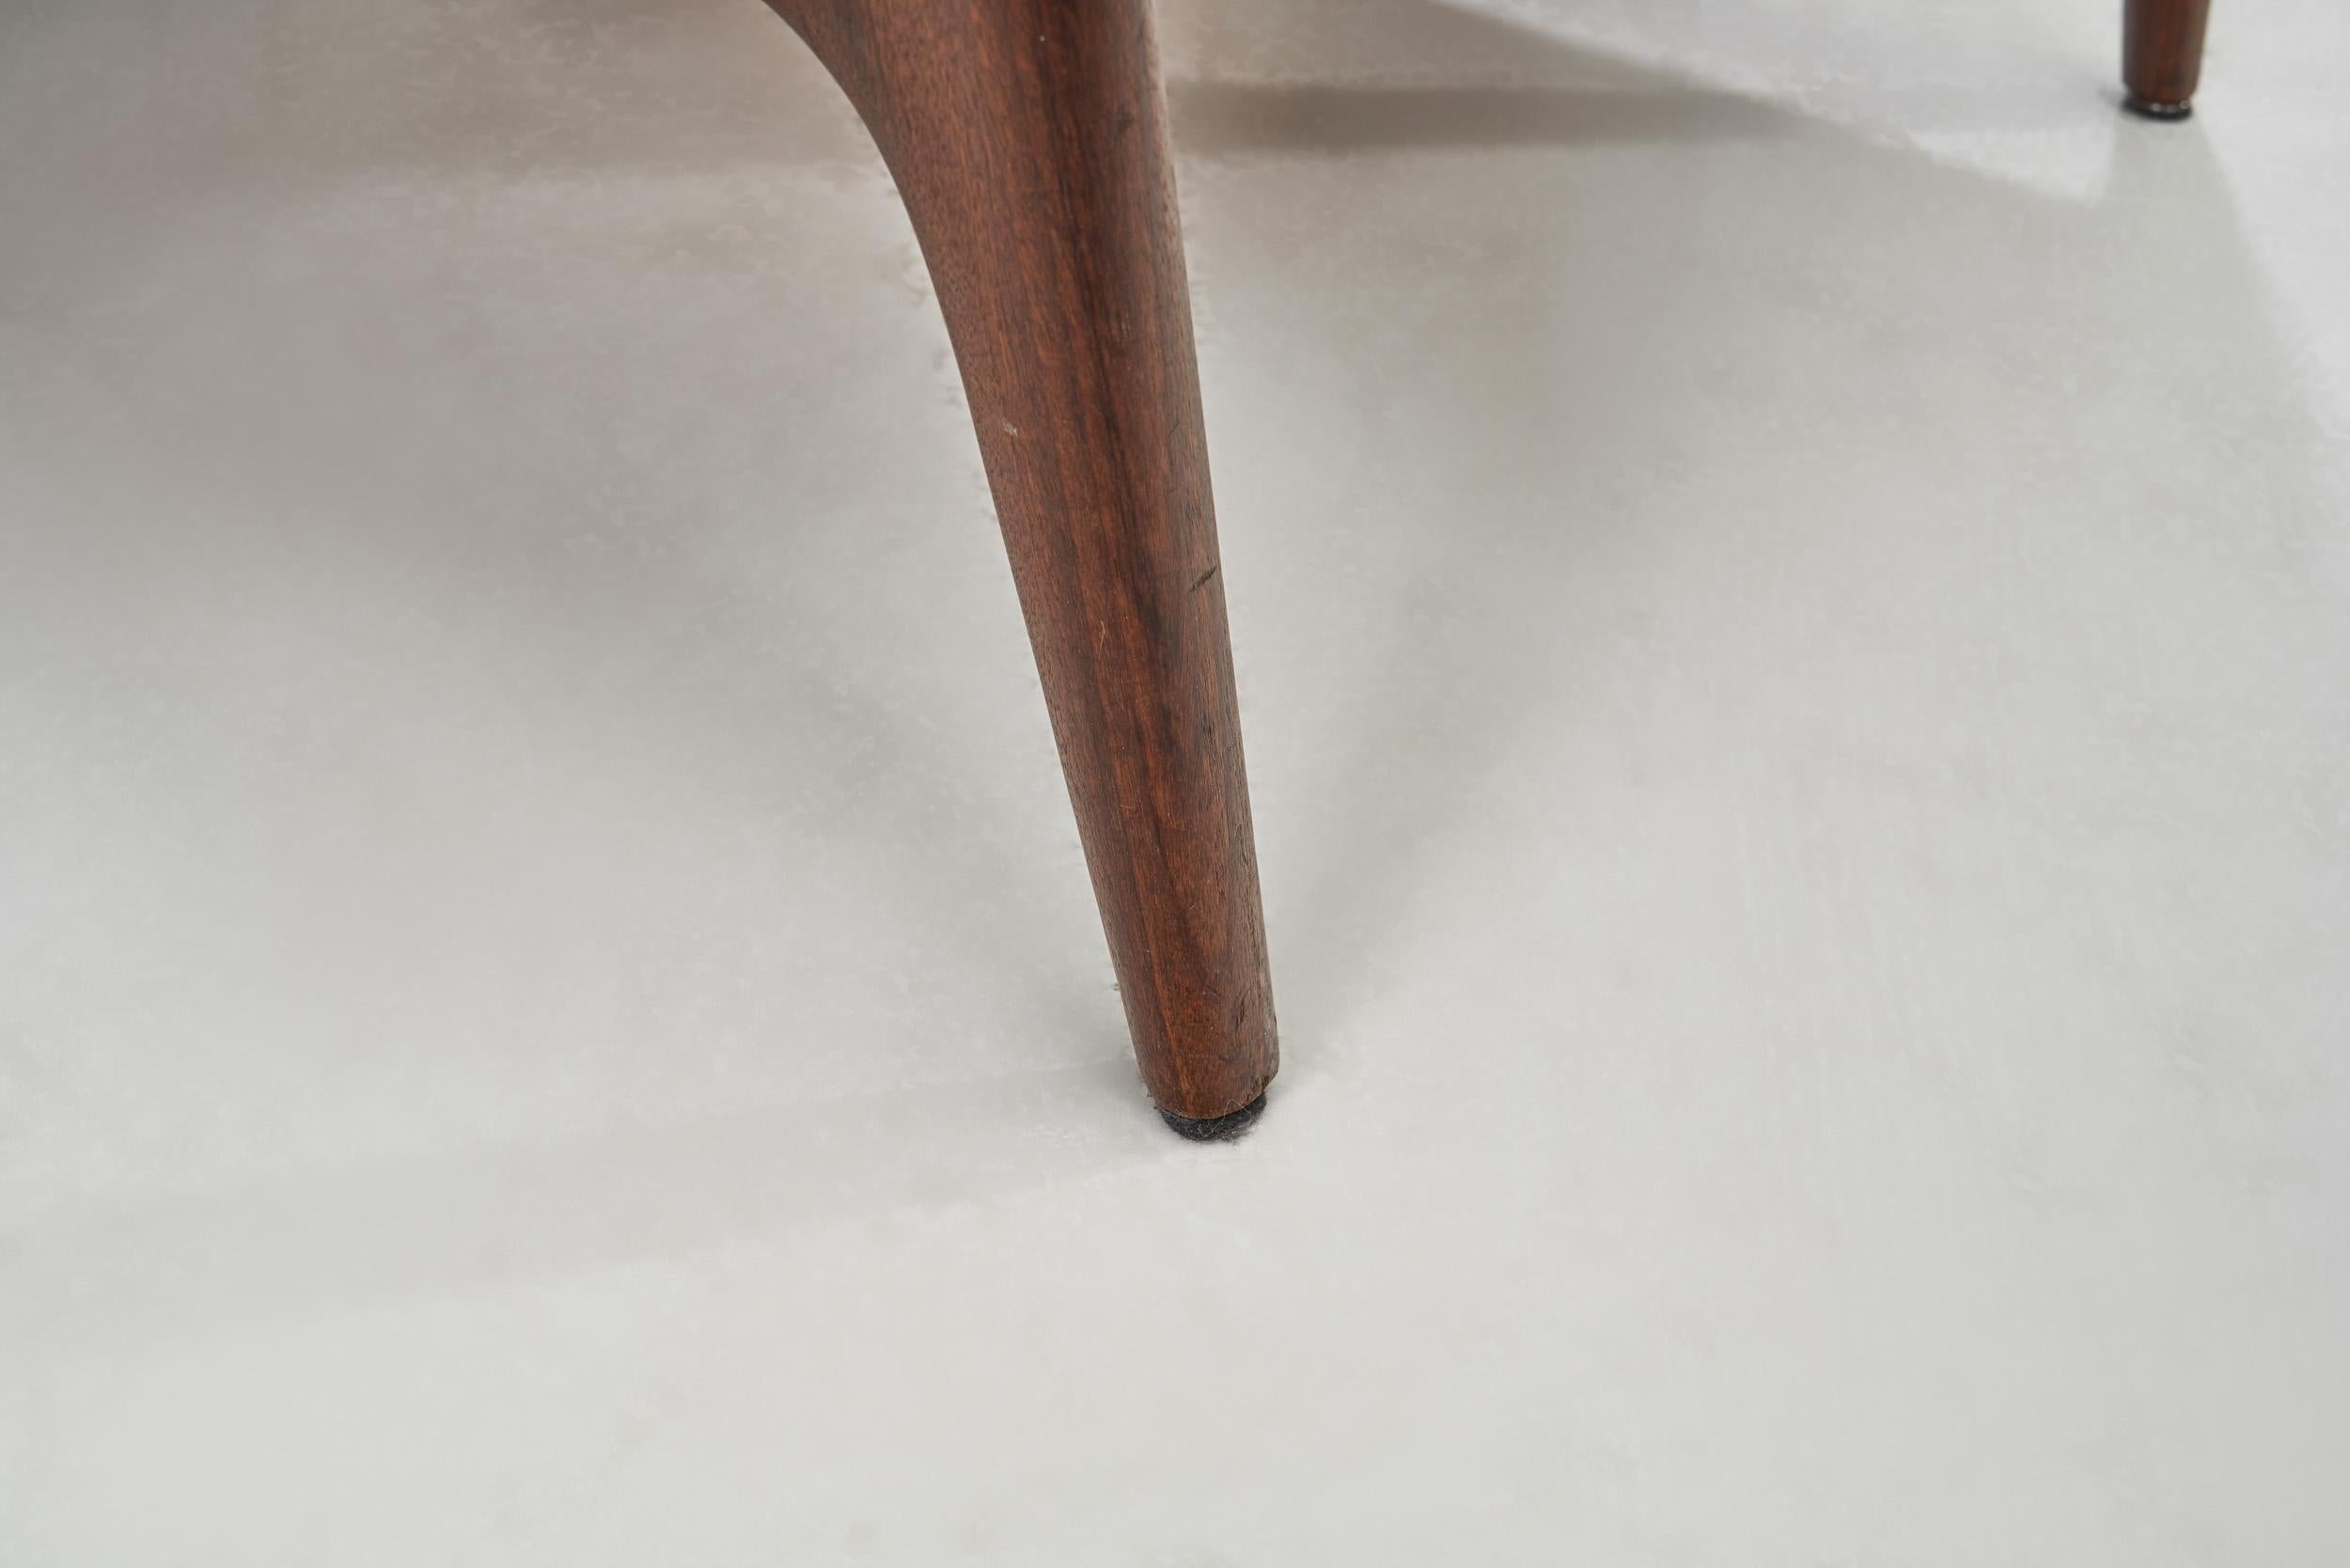 Teak Upholstered Armchairs with Slat Armrests, Denmark 1960s For Sale 10